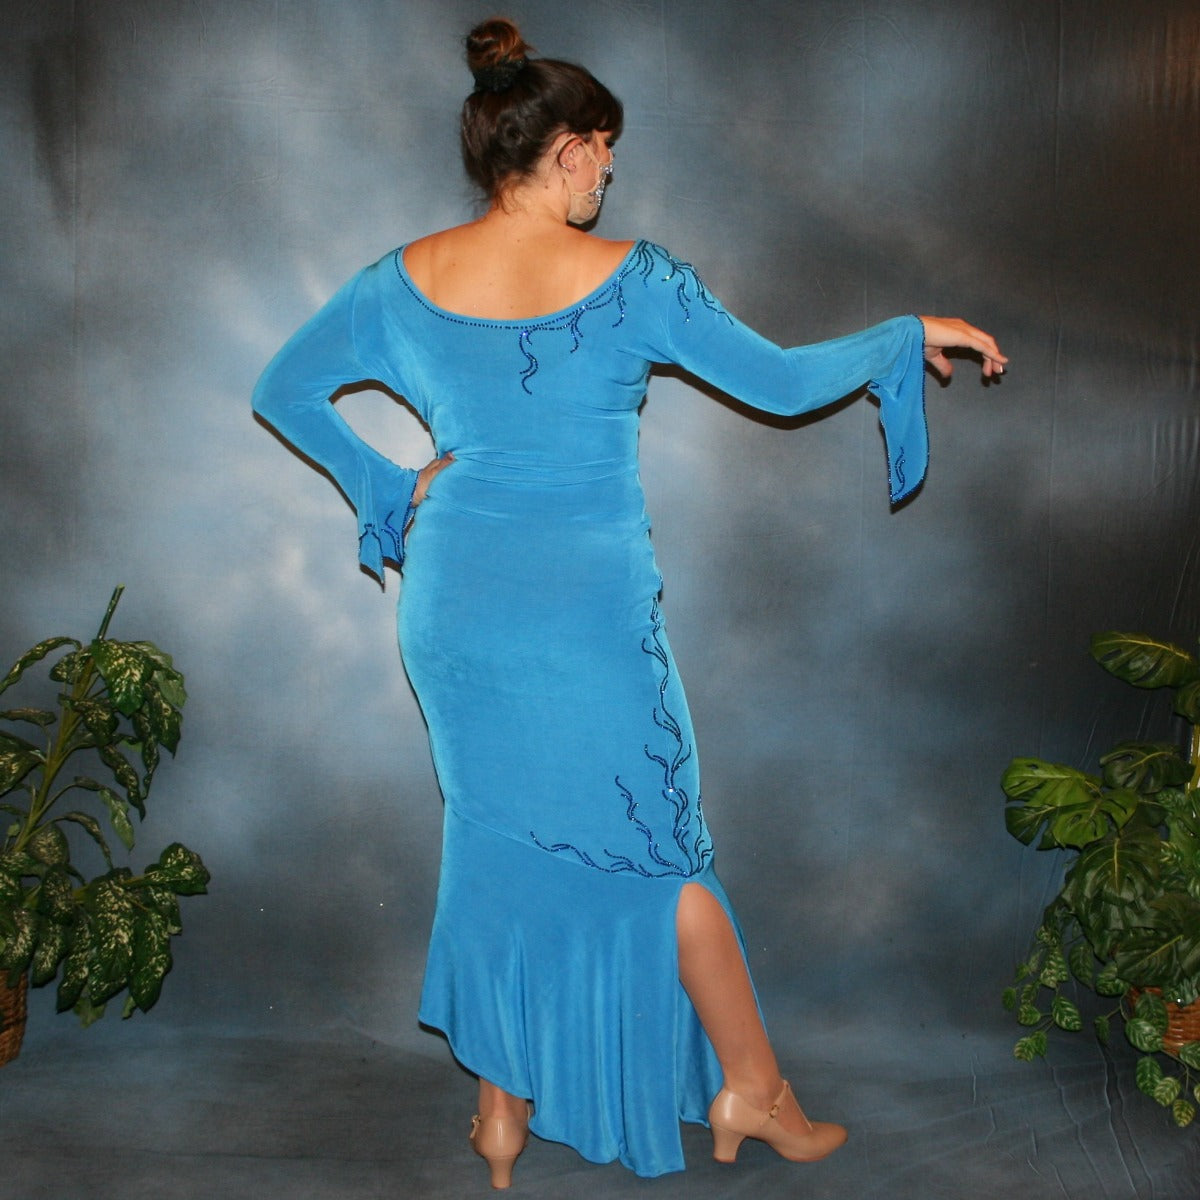 Crystal's Creations back view of blue slinky Latin/rhythm dress with detailed blue Swarovski rhinestone work